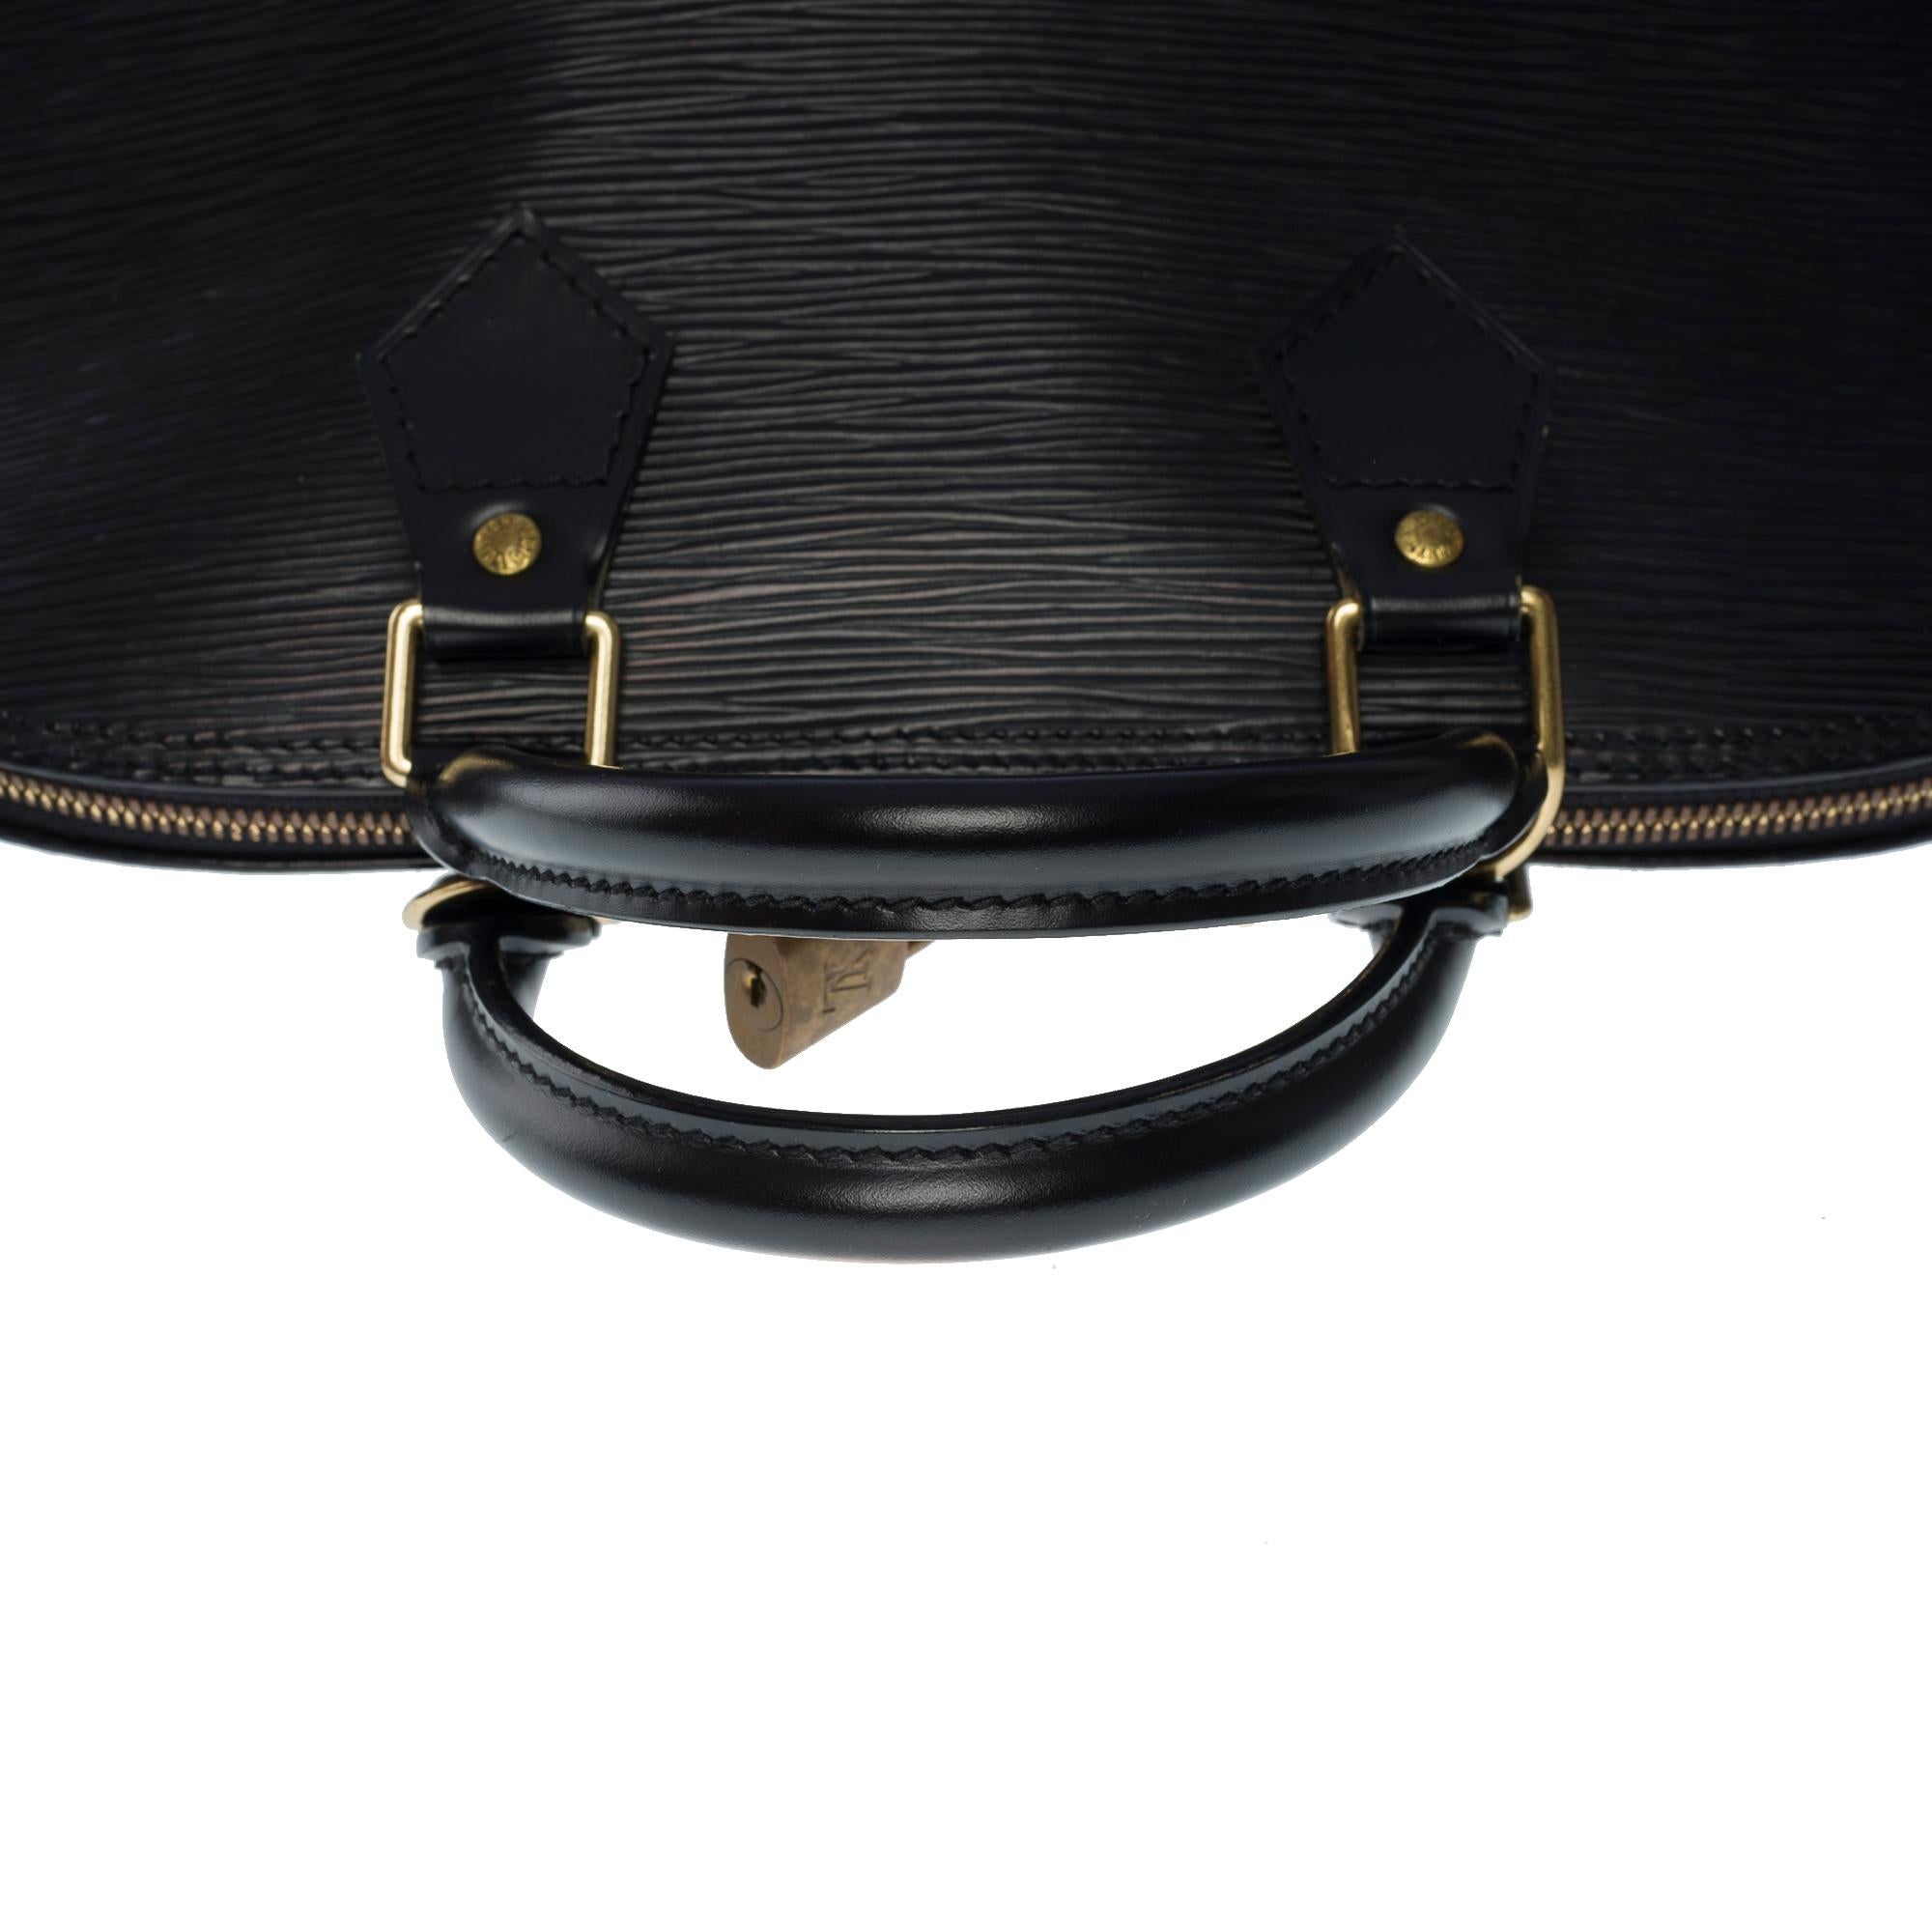 Louis Vuitton Alma handbag in black épi leather with gold hardware 4